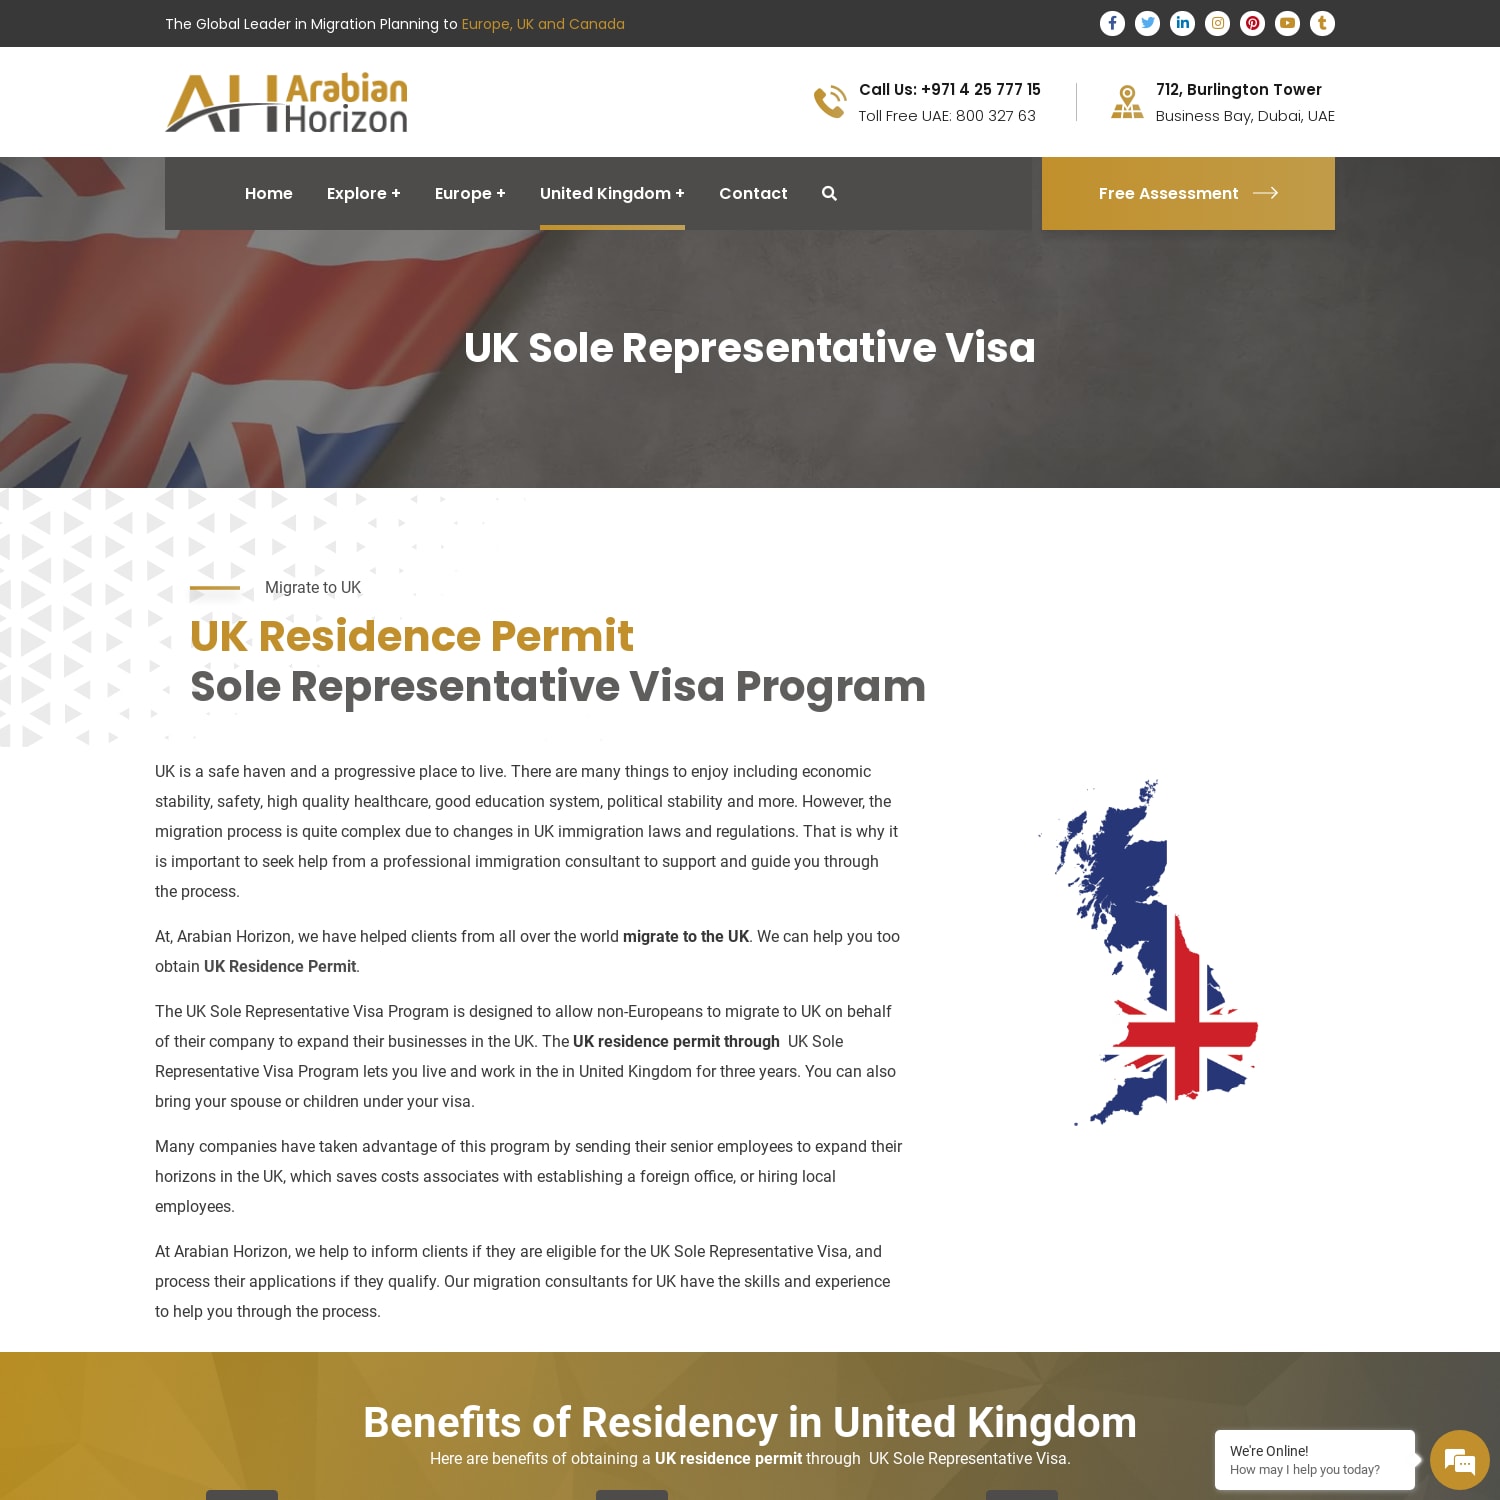 Get UK Residence Permit through UK Sole Representative Visa